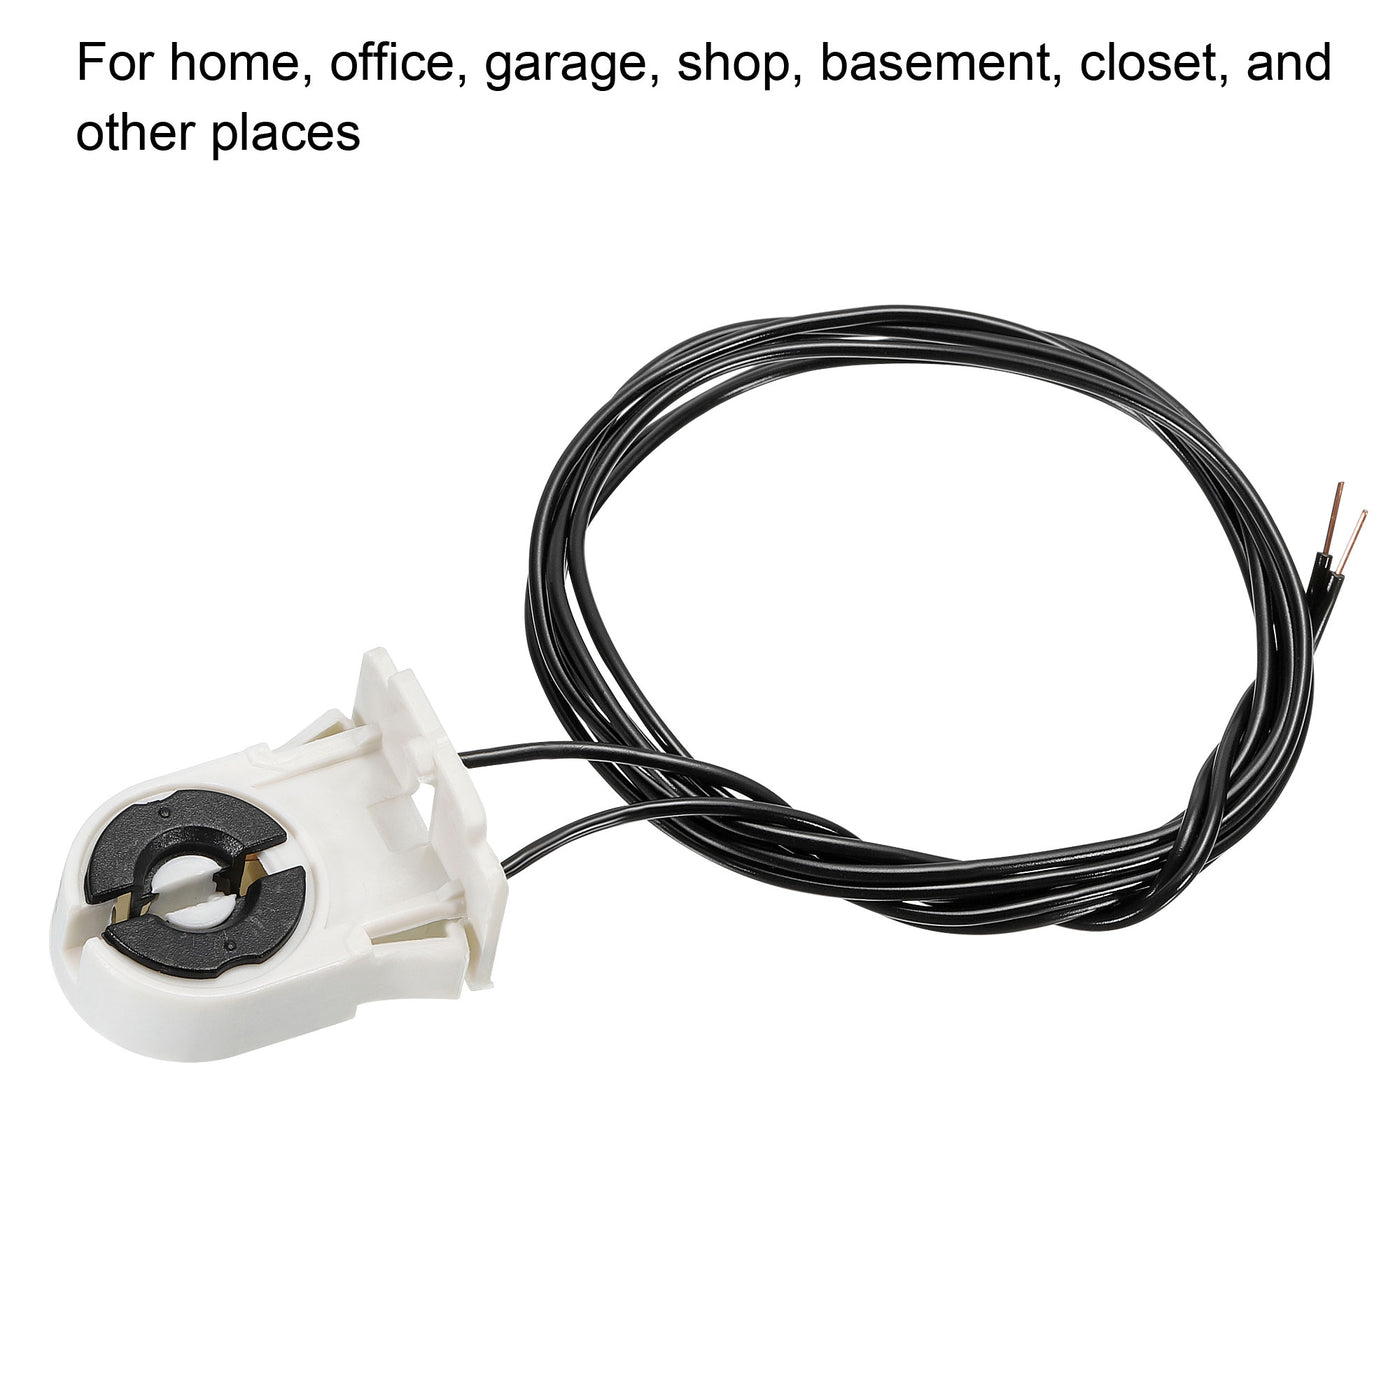 Harfington T8 Lamp Holder Socket Non-Shunted Light Holder with Wire 37x30x24mm for LED Fluorescent Tube, Pack of 8